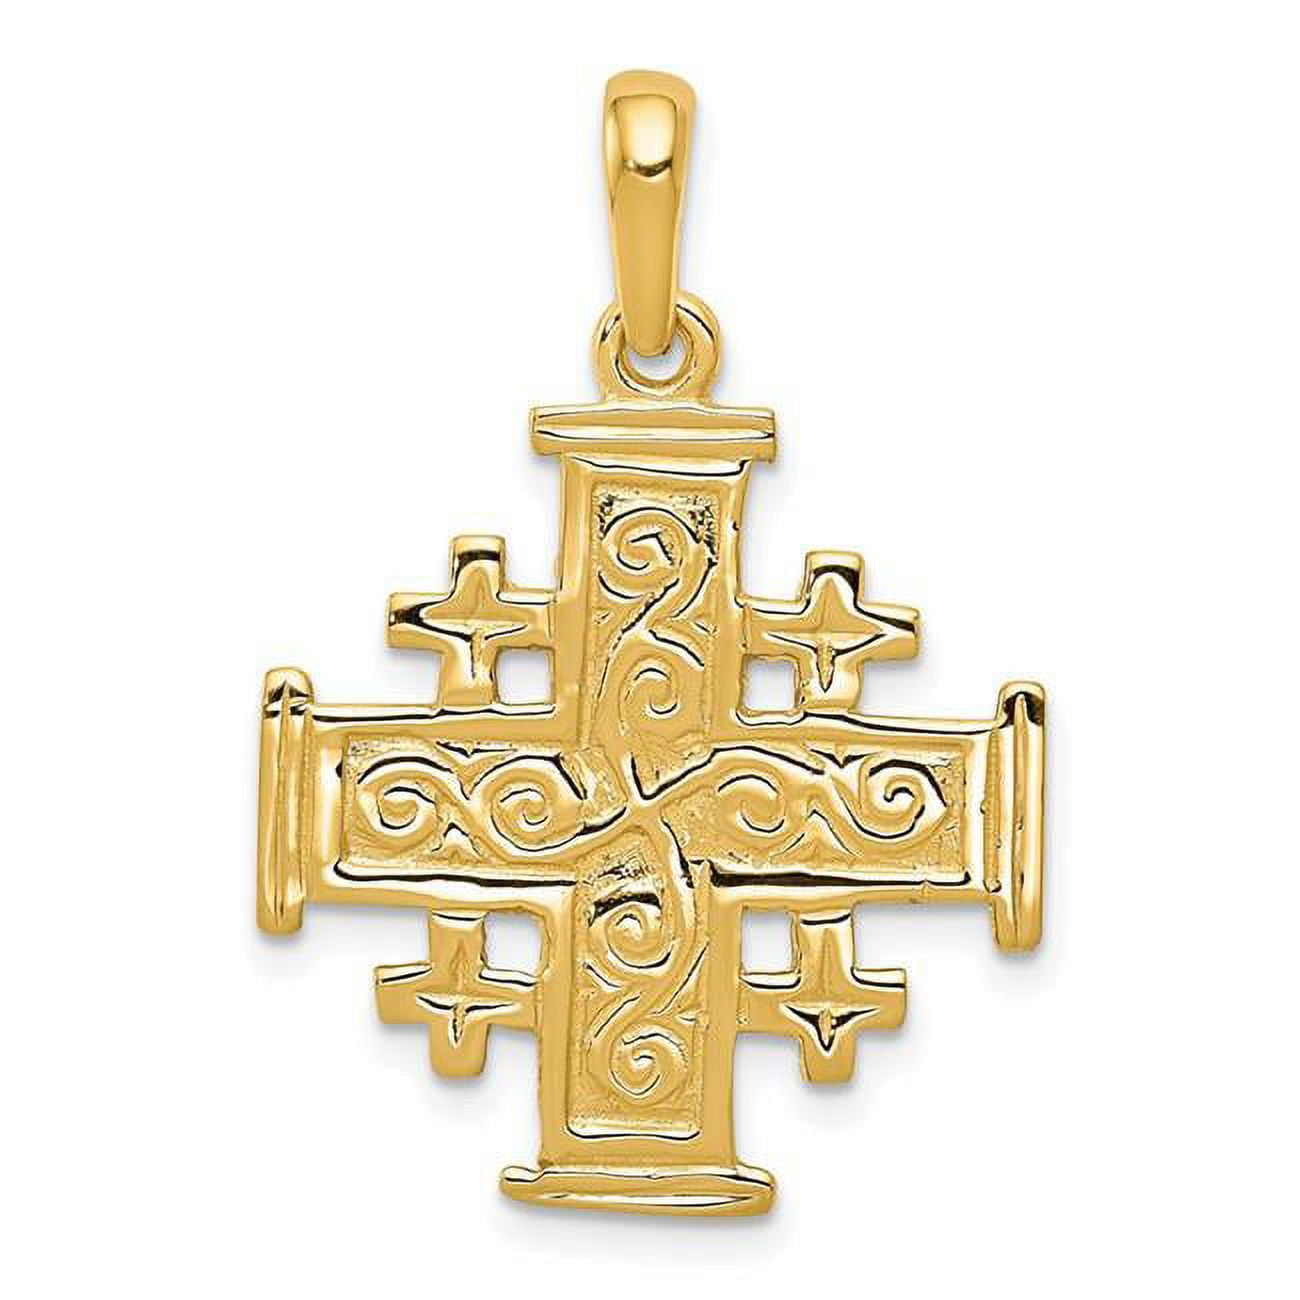 Susan Shaw Dainty Jerusalem Cross Necklace